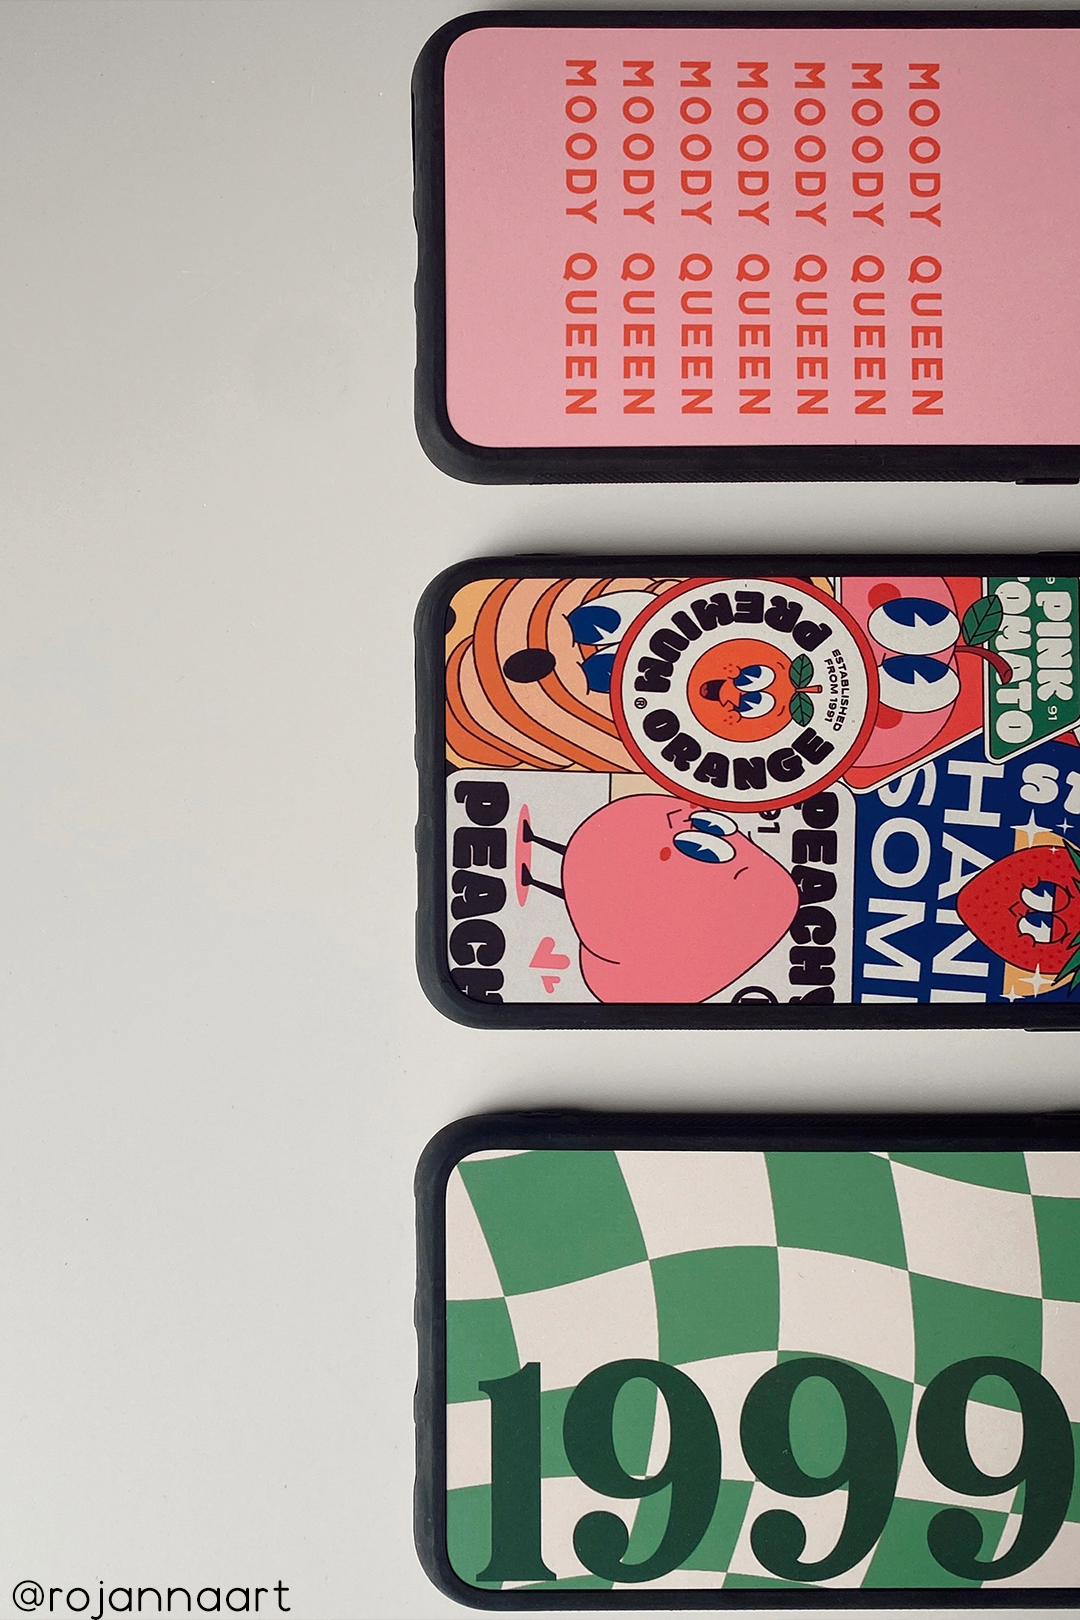 Custom Green Checkered iPhone case